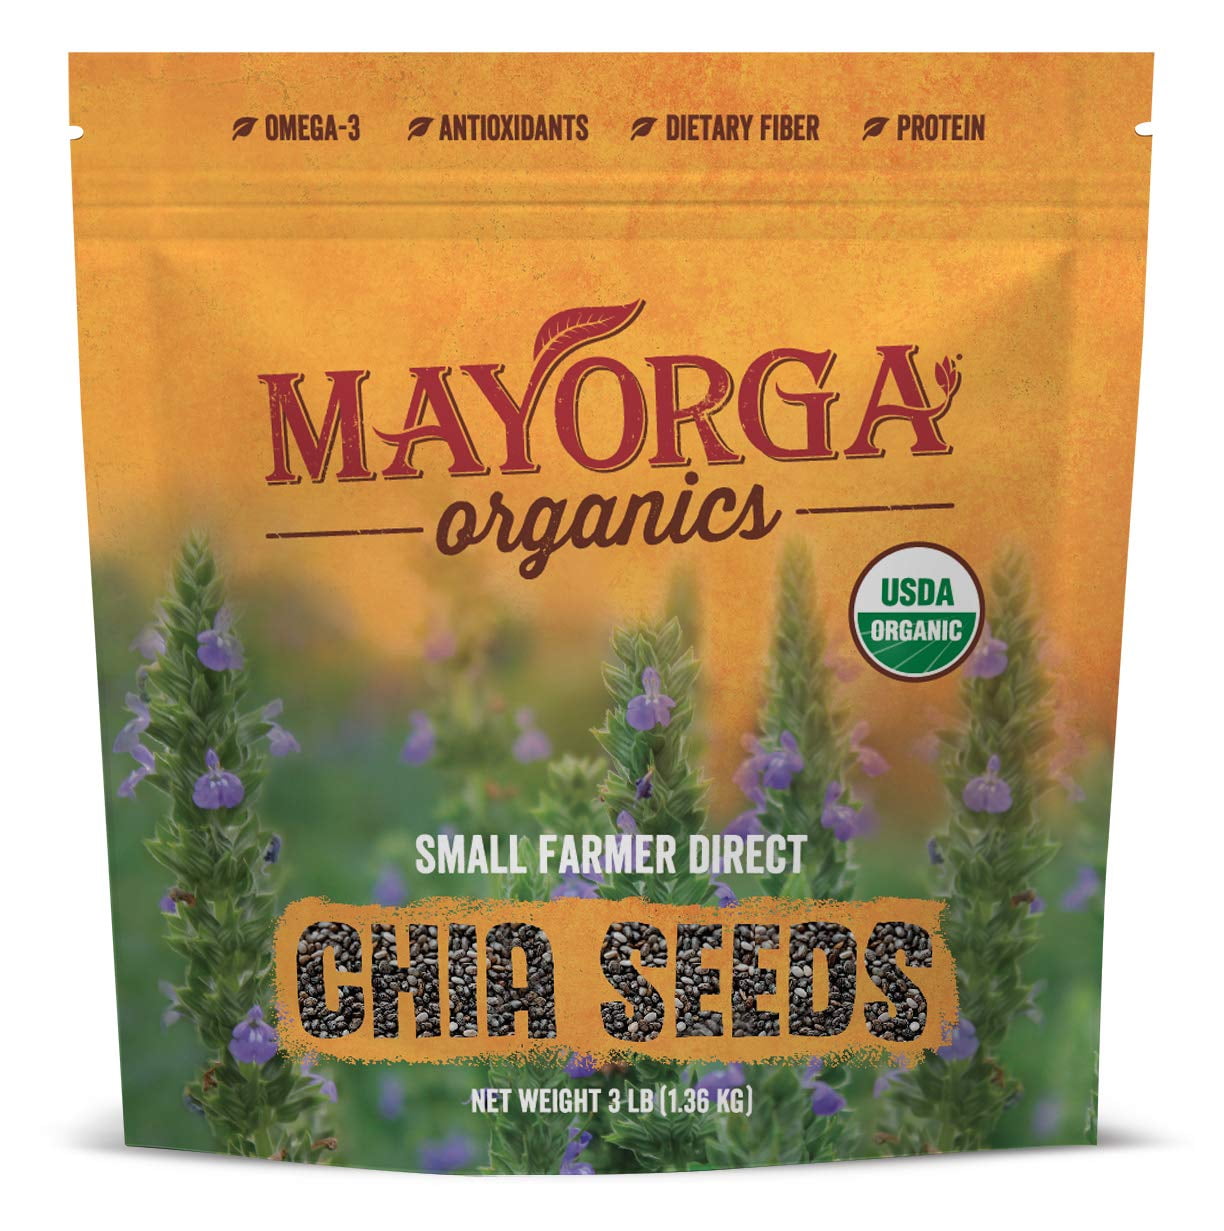 Morel Distribution Company Chia Seeds (Semillas De Chia) Bulk Weights: 1  Lb, 5 Lbs, 10 Lbs, 15 Lbs, and 20 Lbs!! (5 Lbs)